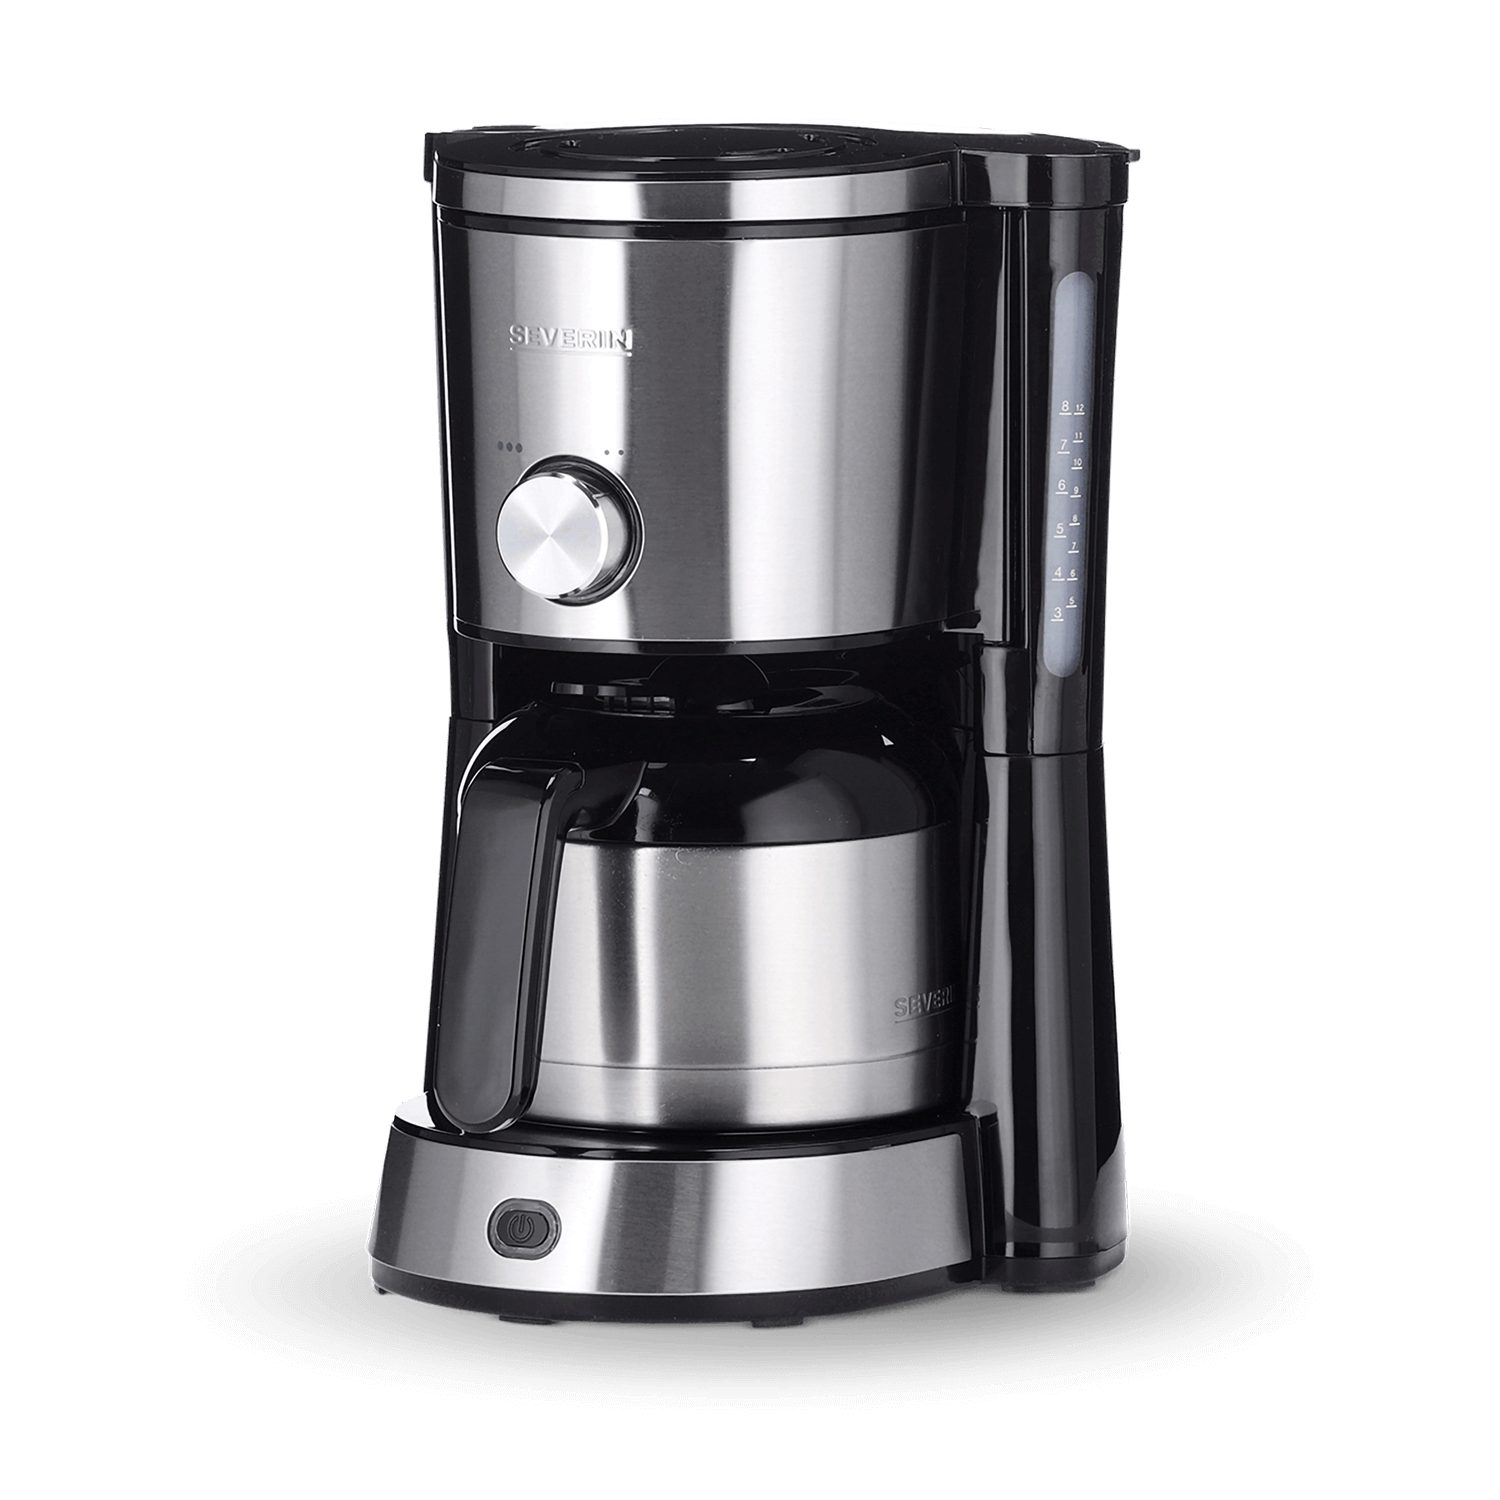 Severin Kaffeemaschine mit Mahlwerk KA 4845, 1l Kaffeekanne, nein 1x 4 Filter, Spülmaschinen geeignet, Wasserstandsanzeige